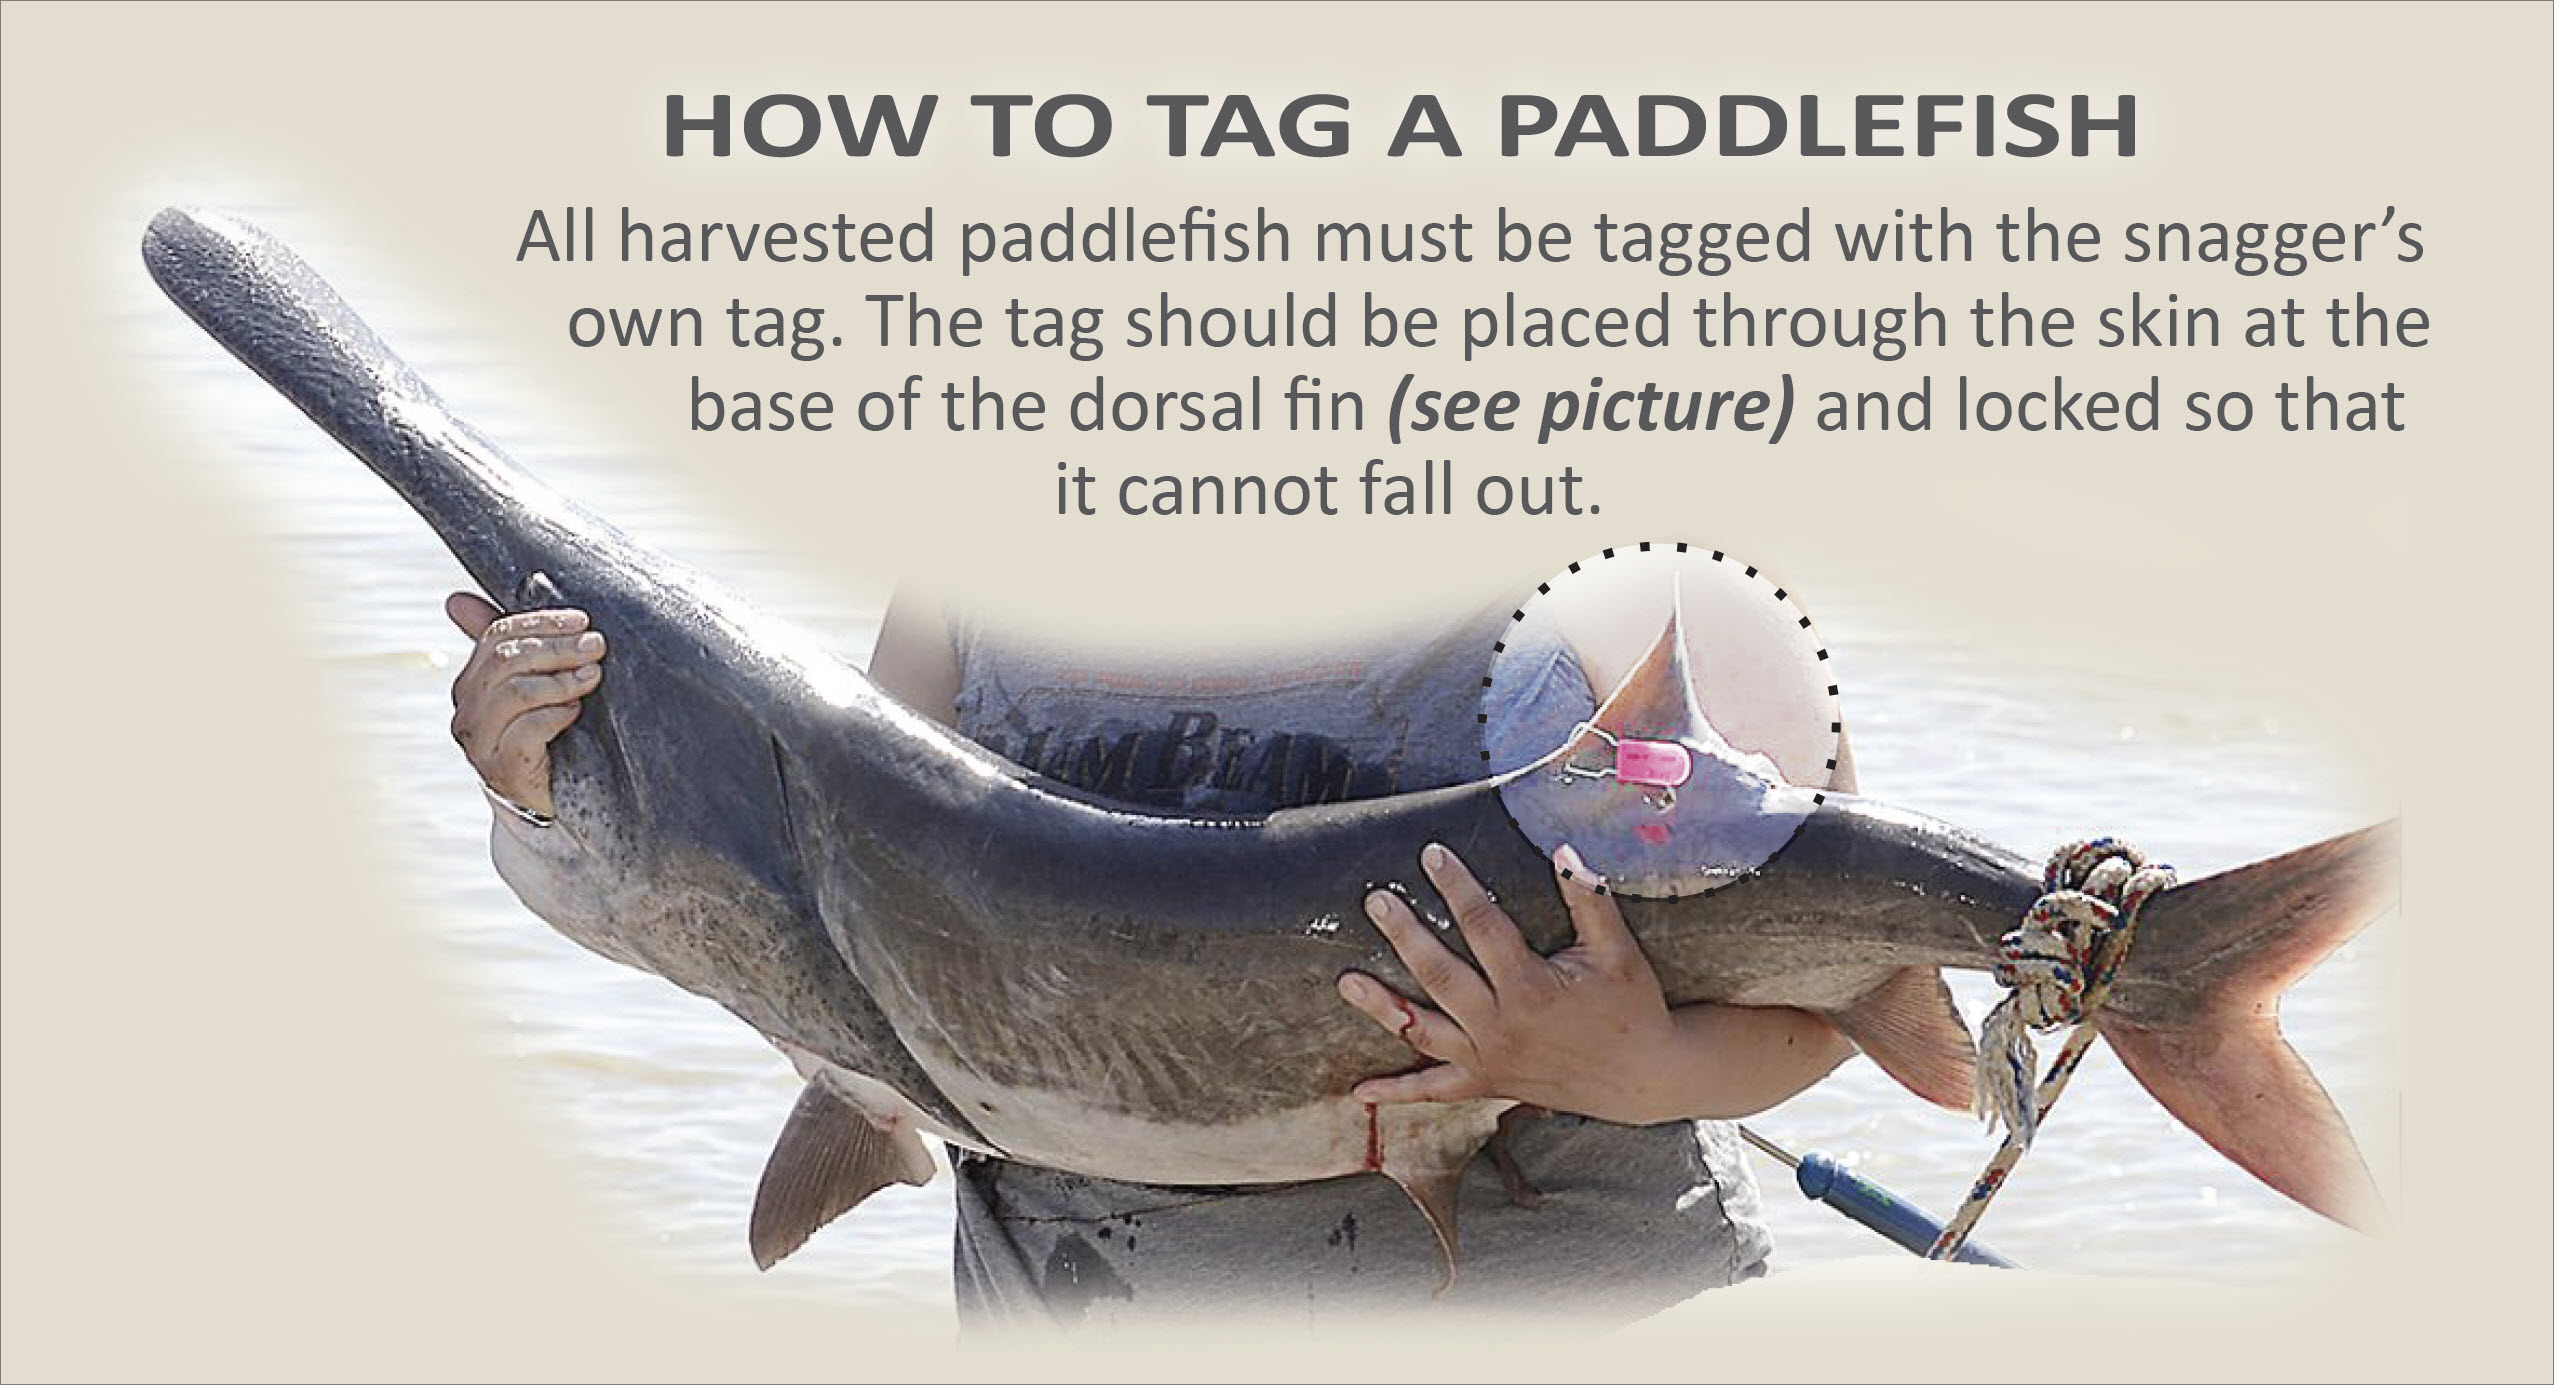 Paddlefish with tag